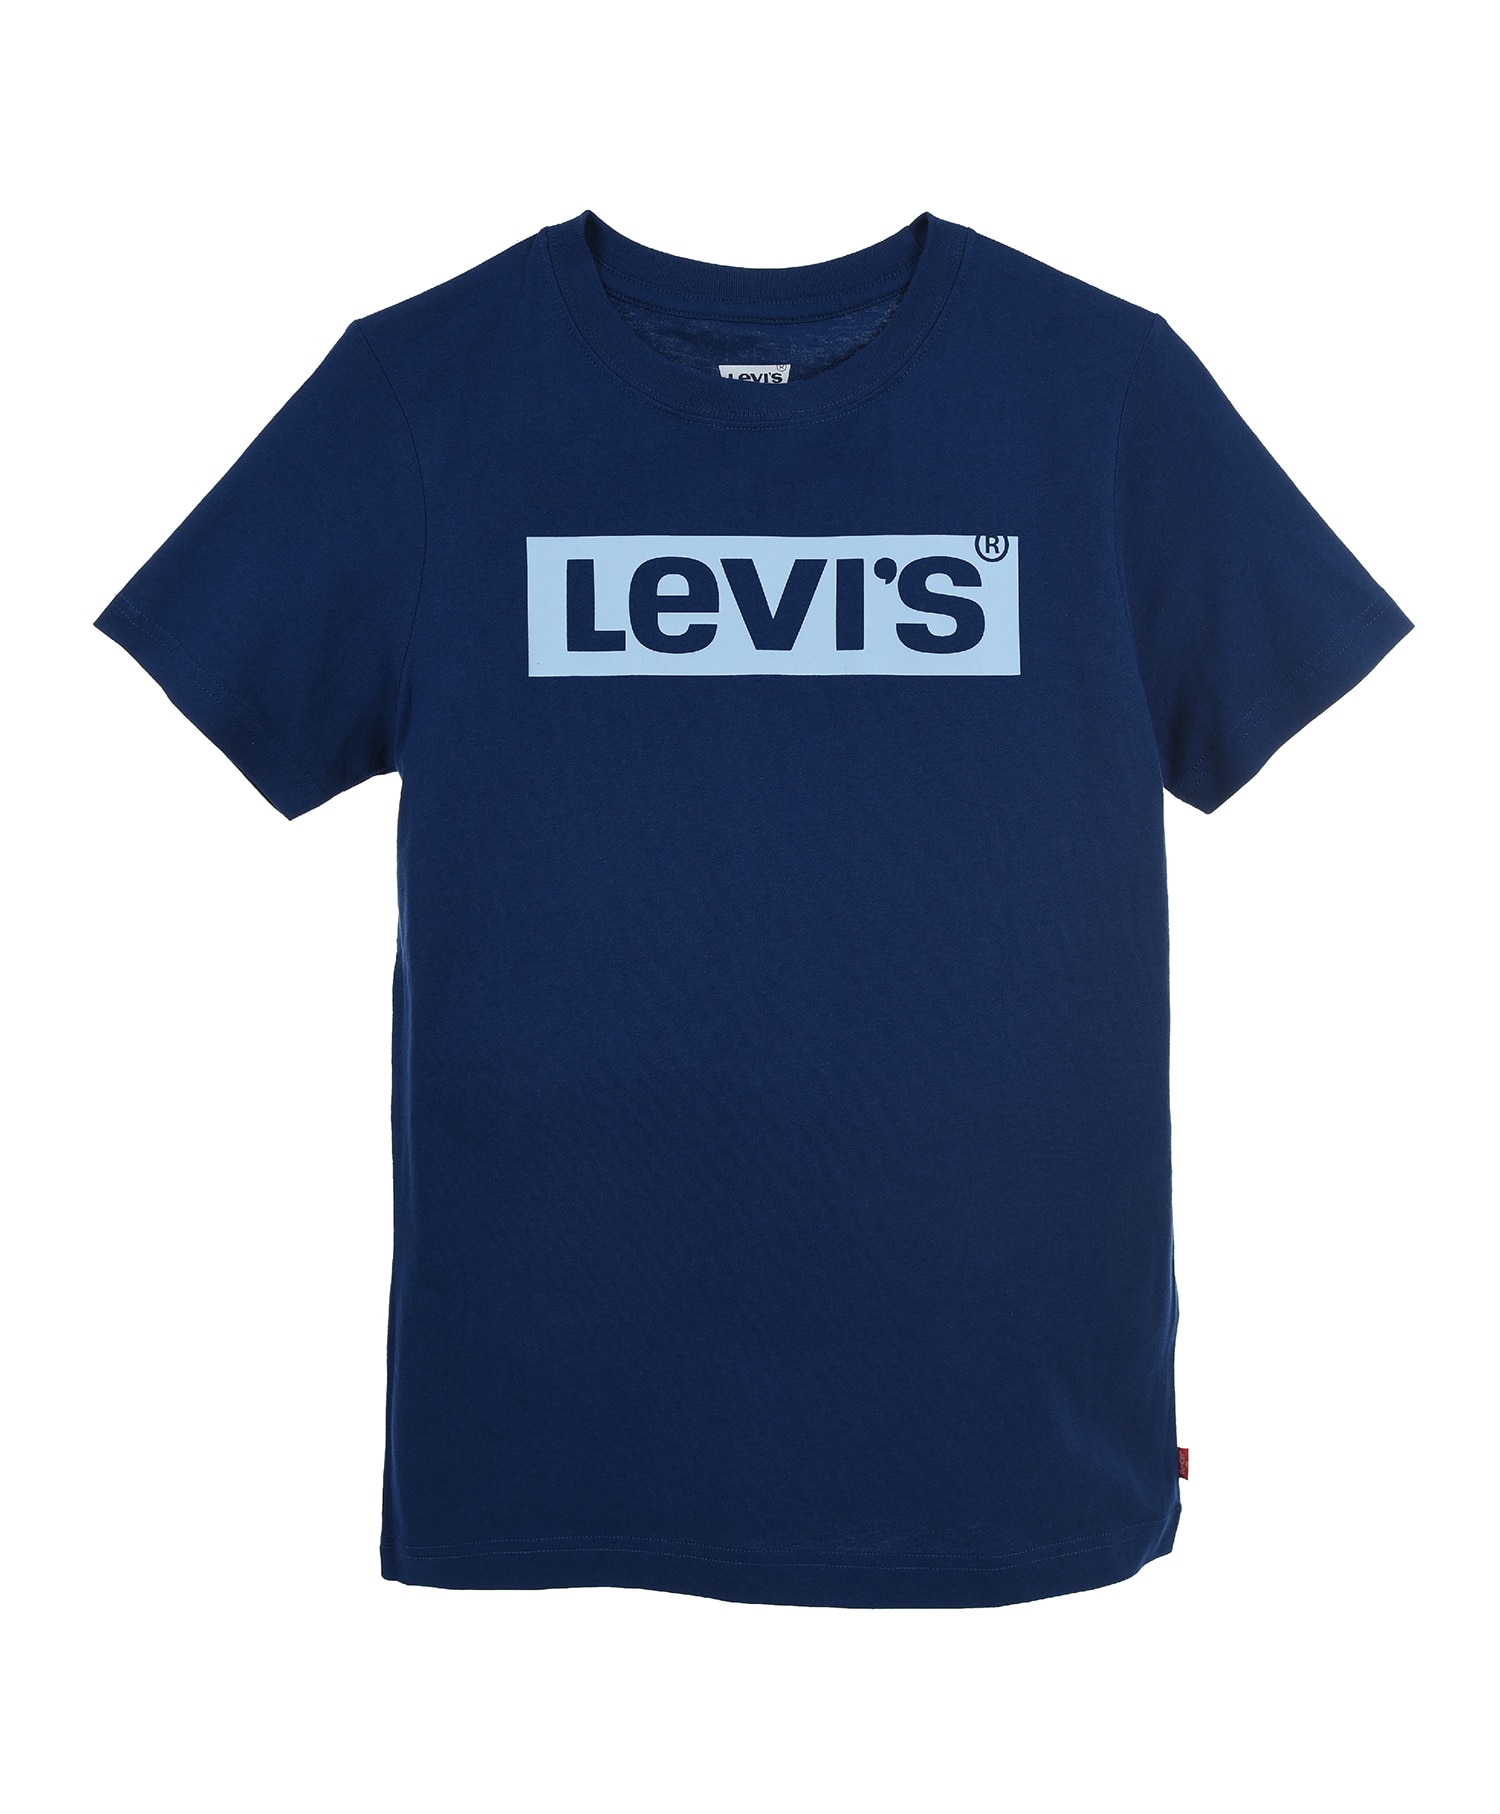 Levi's Graphic T-shirt